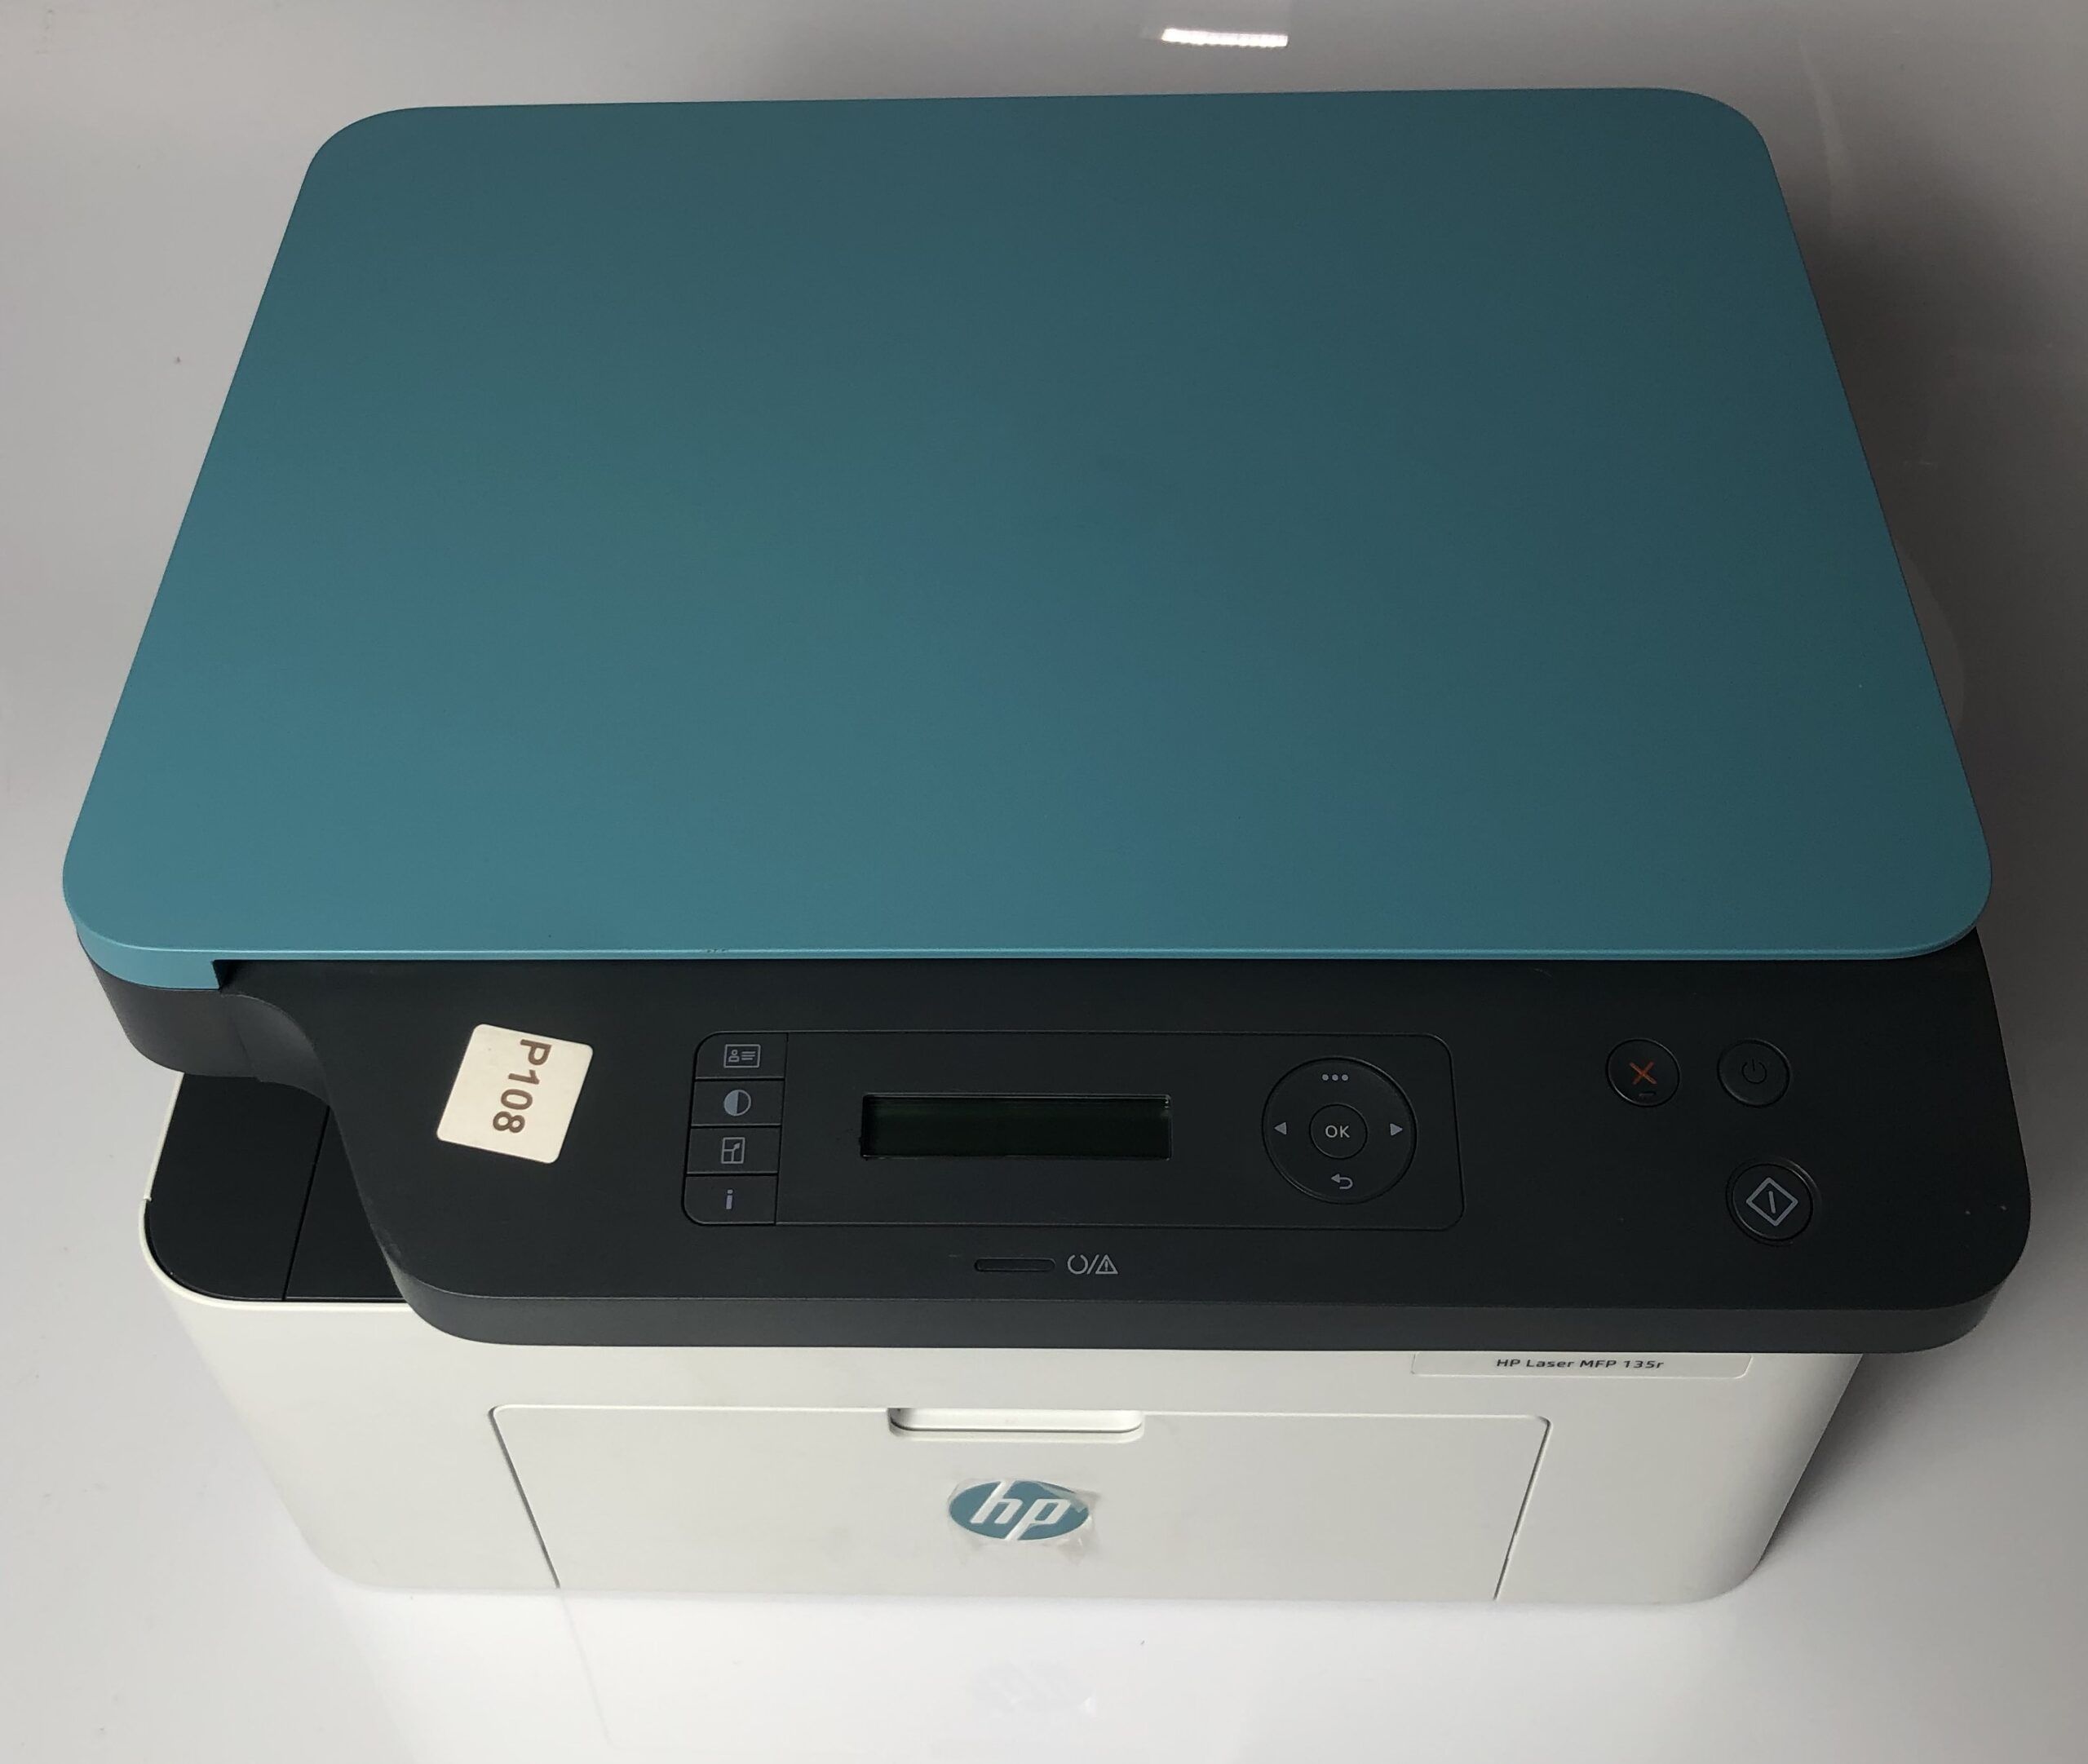 HP Laser Monochromatyczna drukarka laserowa 135r 20 ppm, 1200x1200 DPI